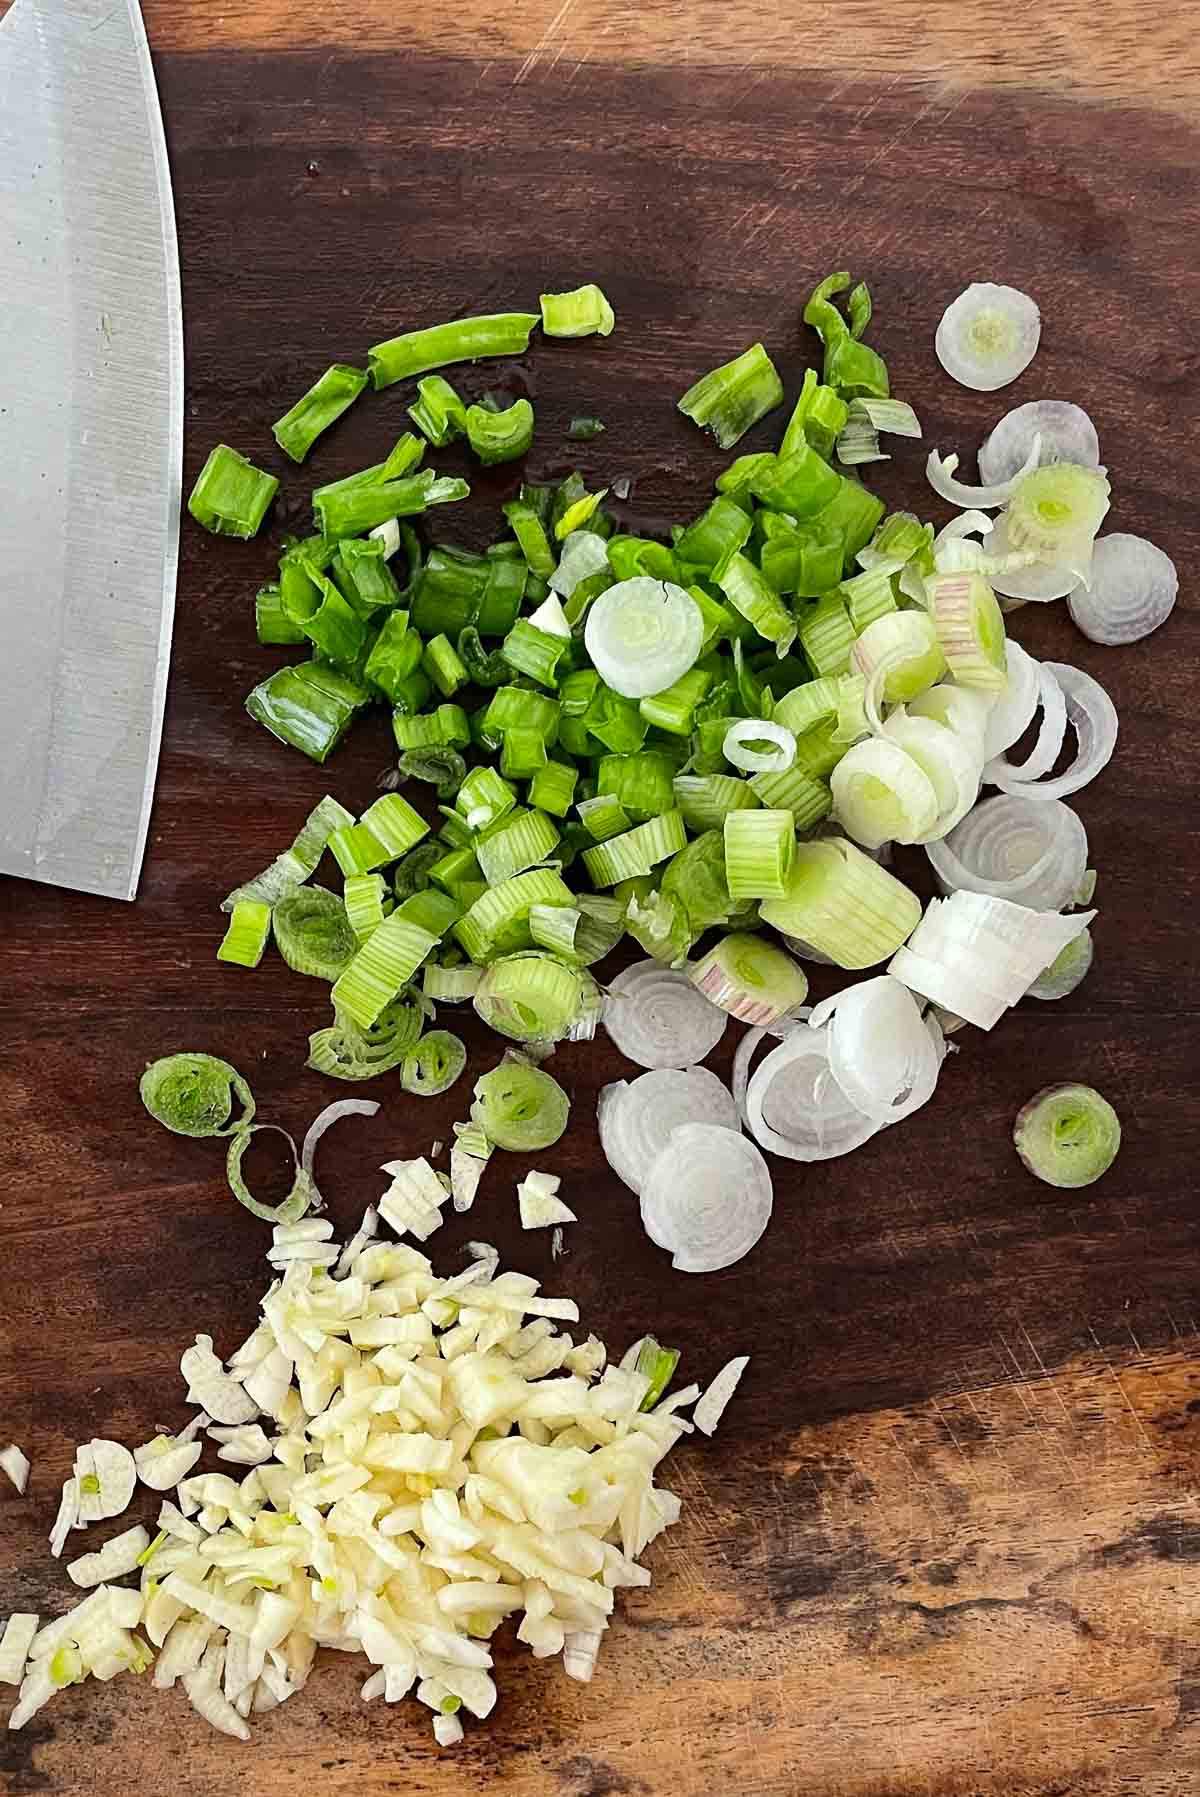 Diced scallions and garlic